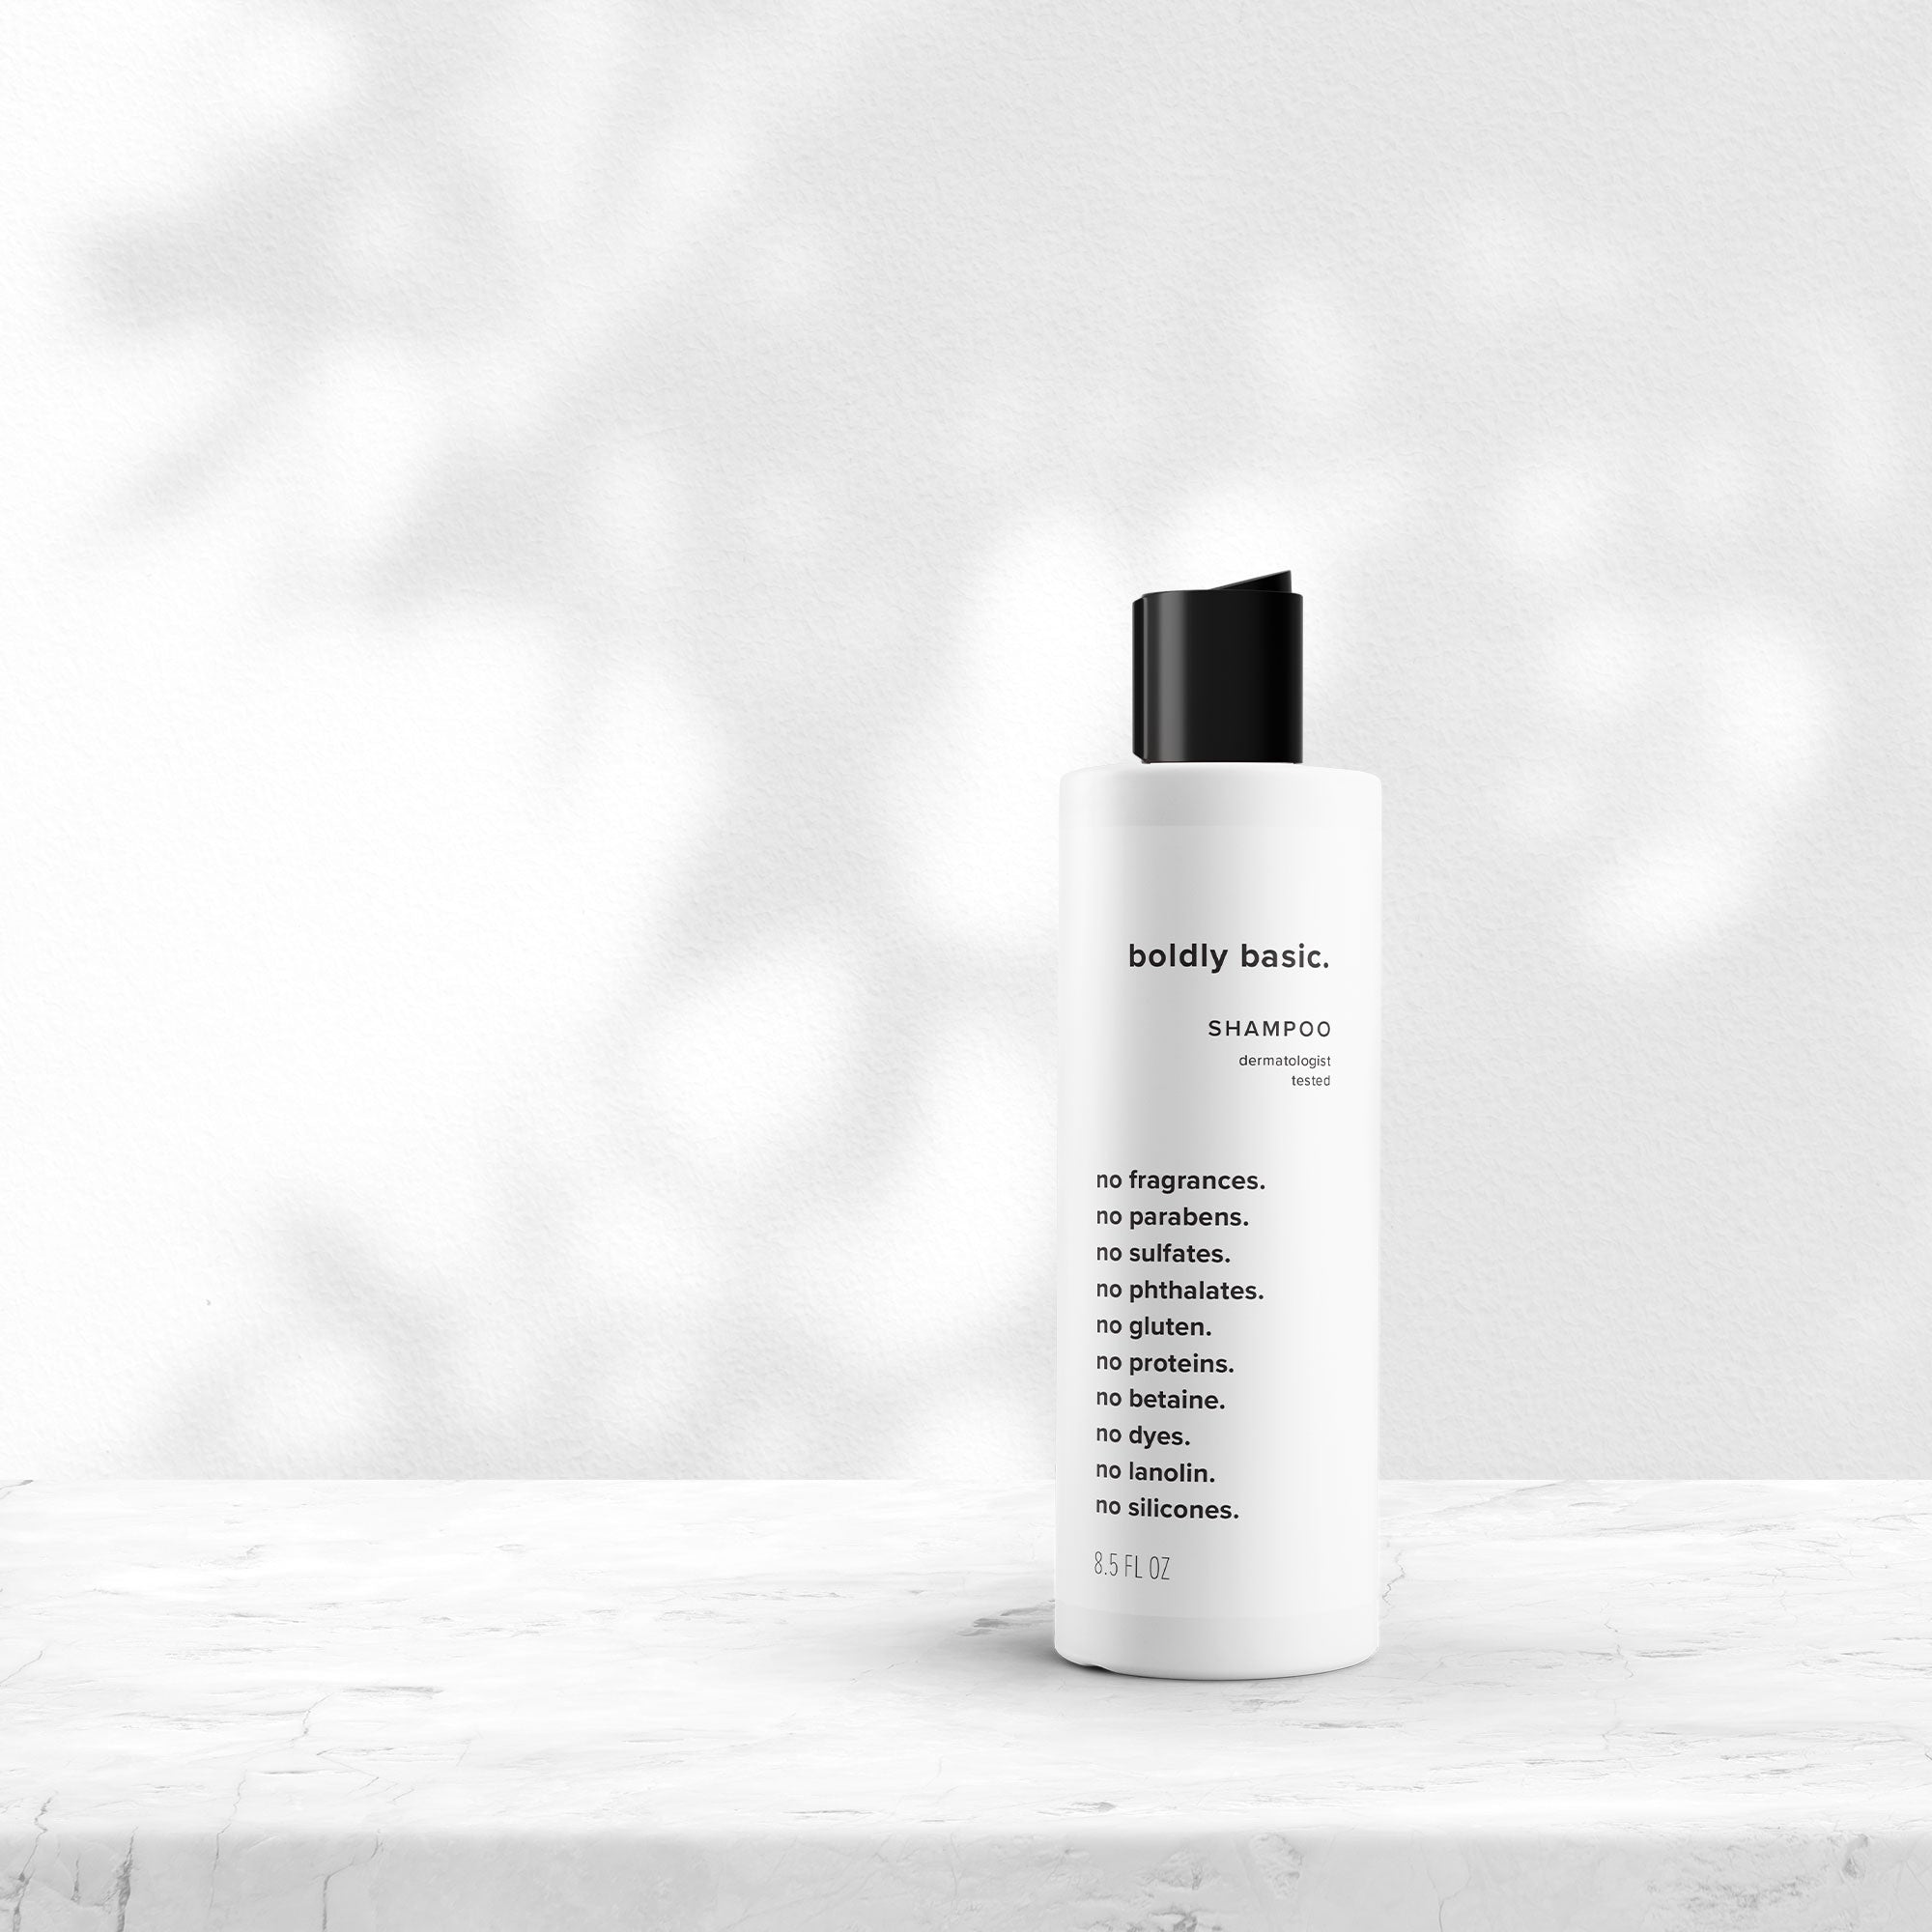 karolina krol studio boldly basic minimalist no parabens no toxins shampoo sustainable brand packaging design